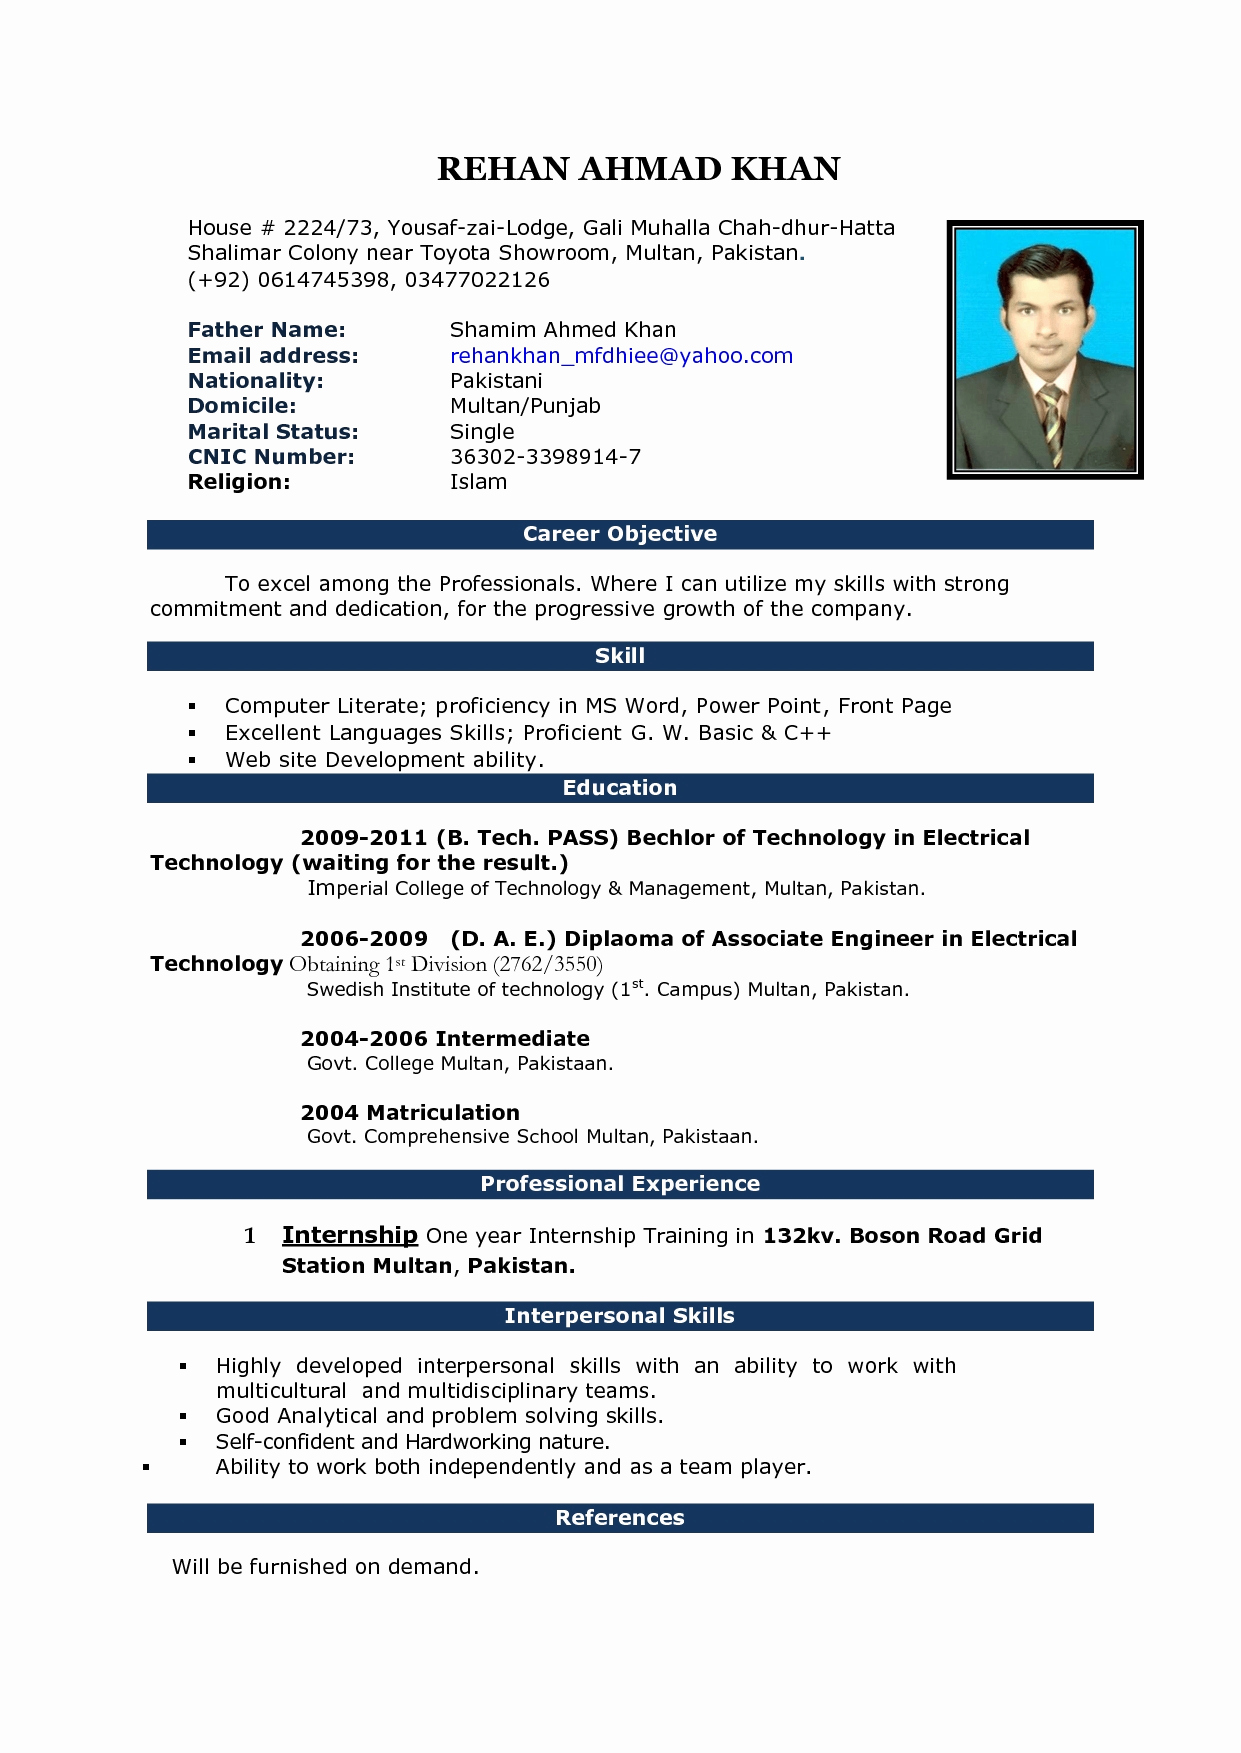 Resume Template Microsoft Word 2007